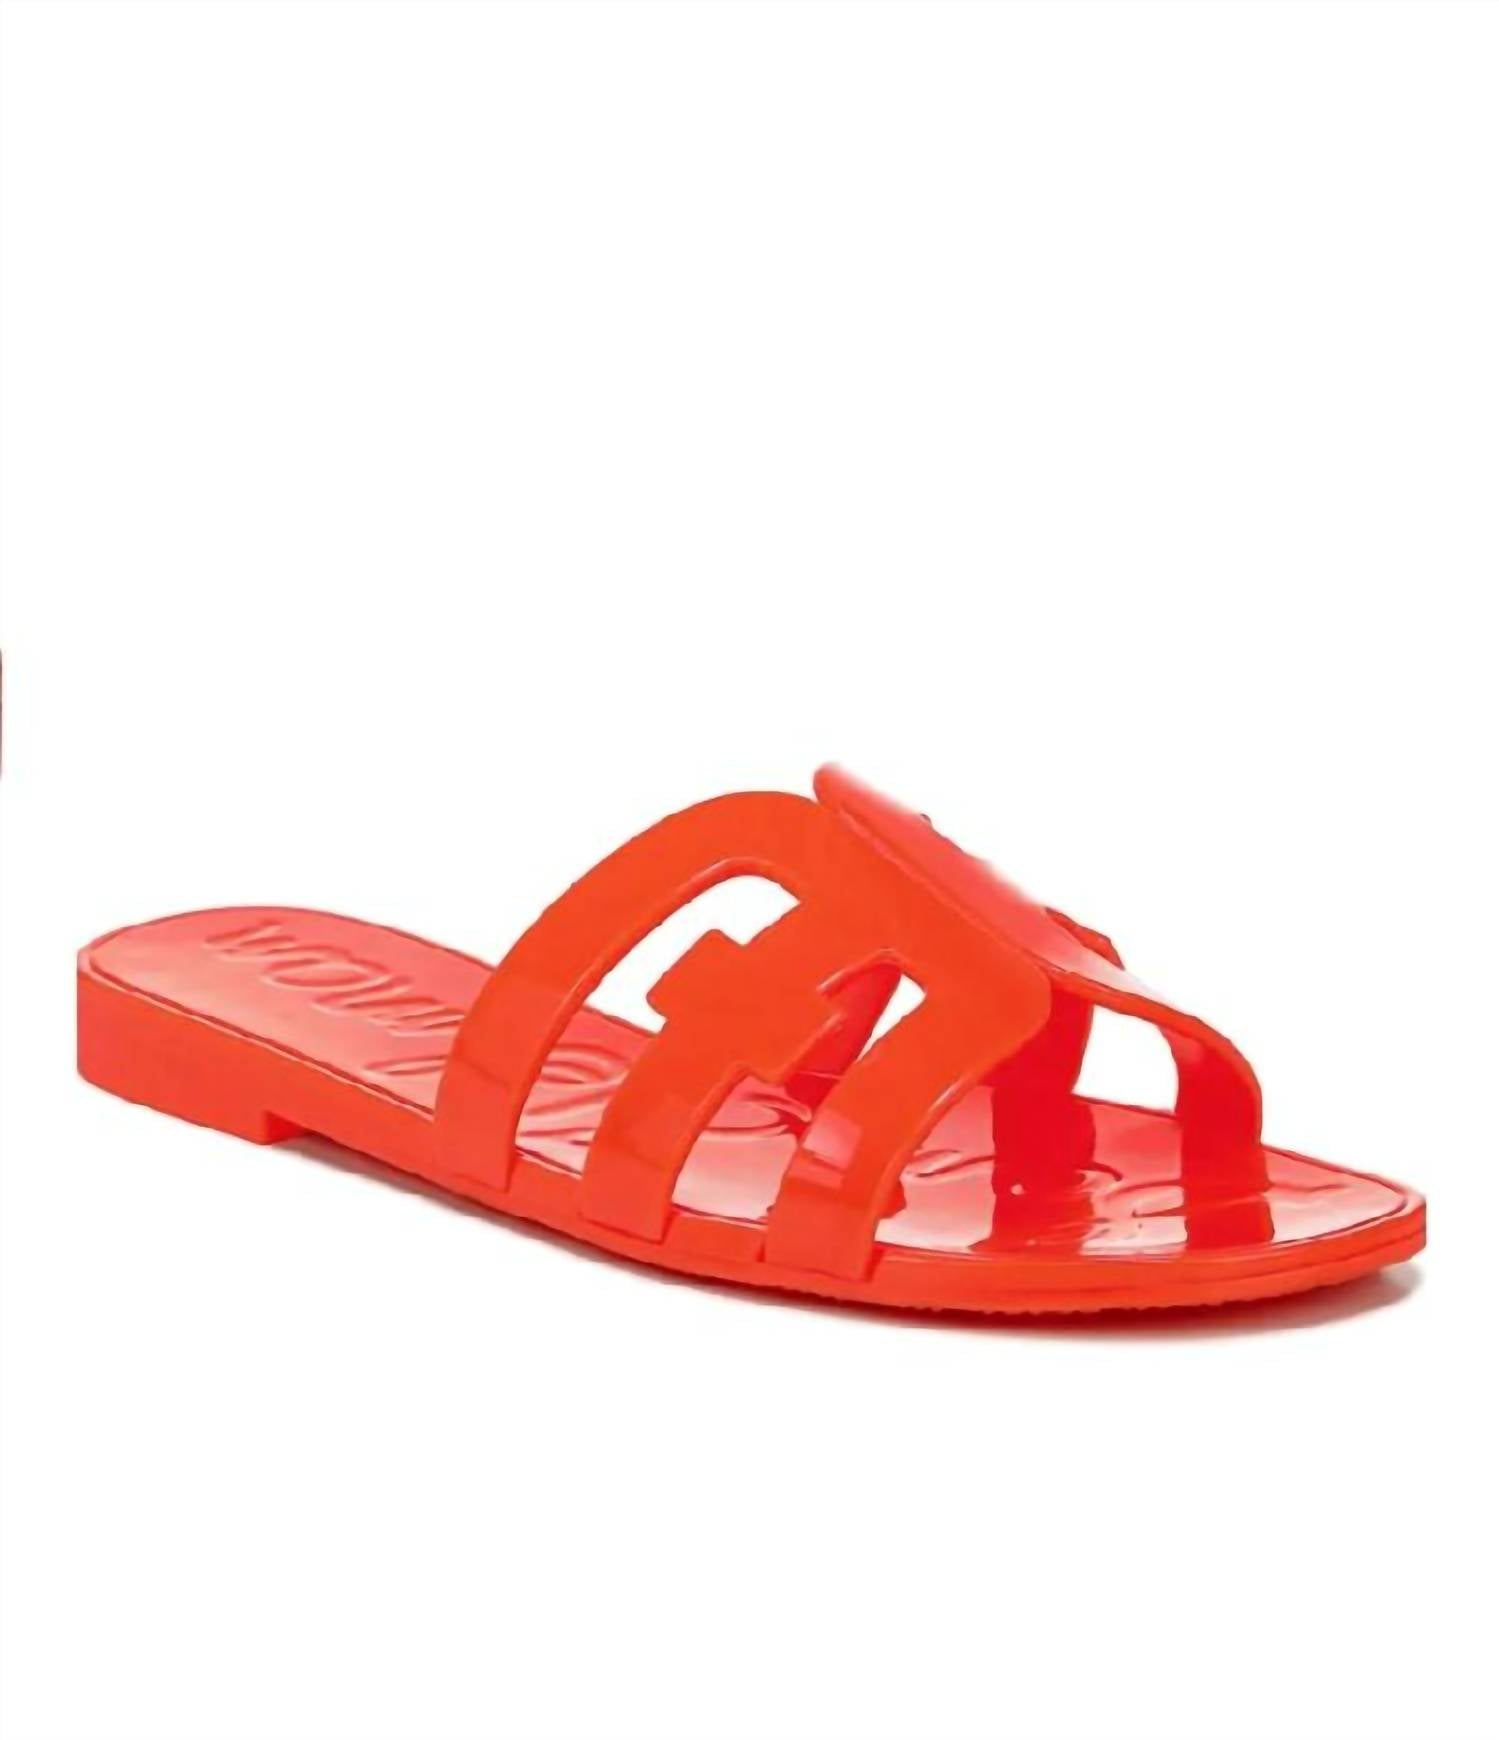 SAM EDELMAN Bay Jelly Slide Sandal in Bright Poppy